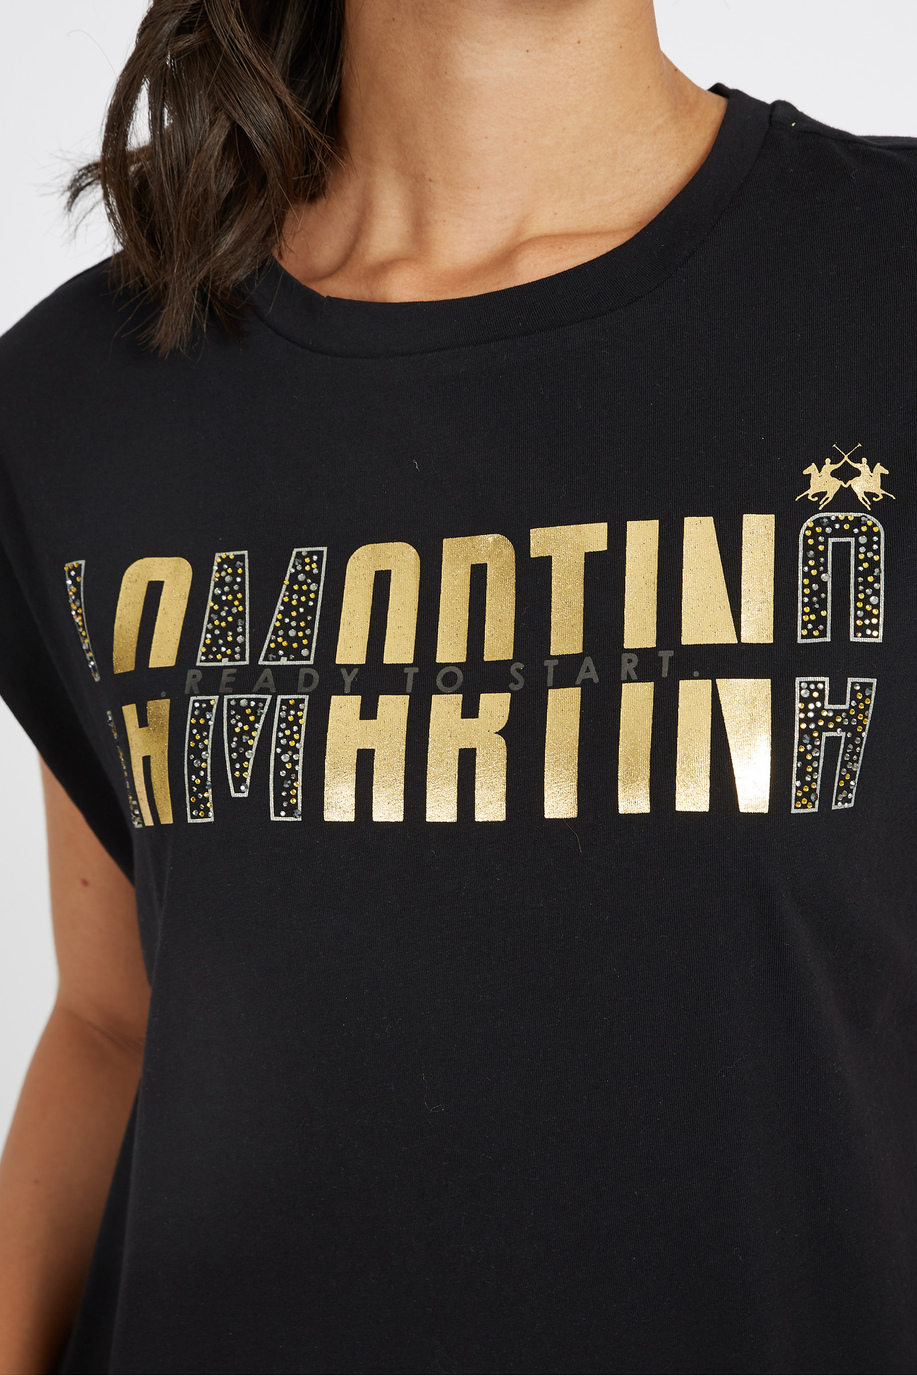 T-shirt da donna senza maniche 100% cotone elasticizzato regular fit - Versie - Jet Set | La Martina - Official Online Shop